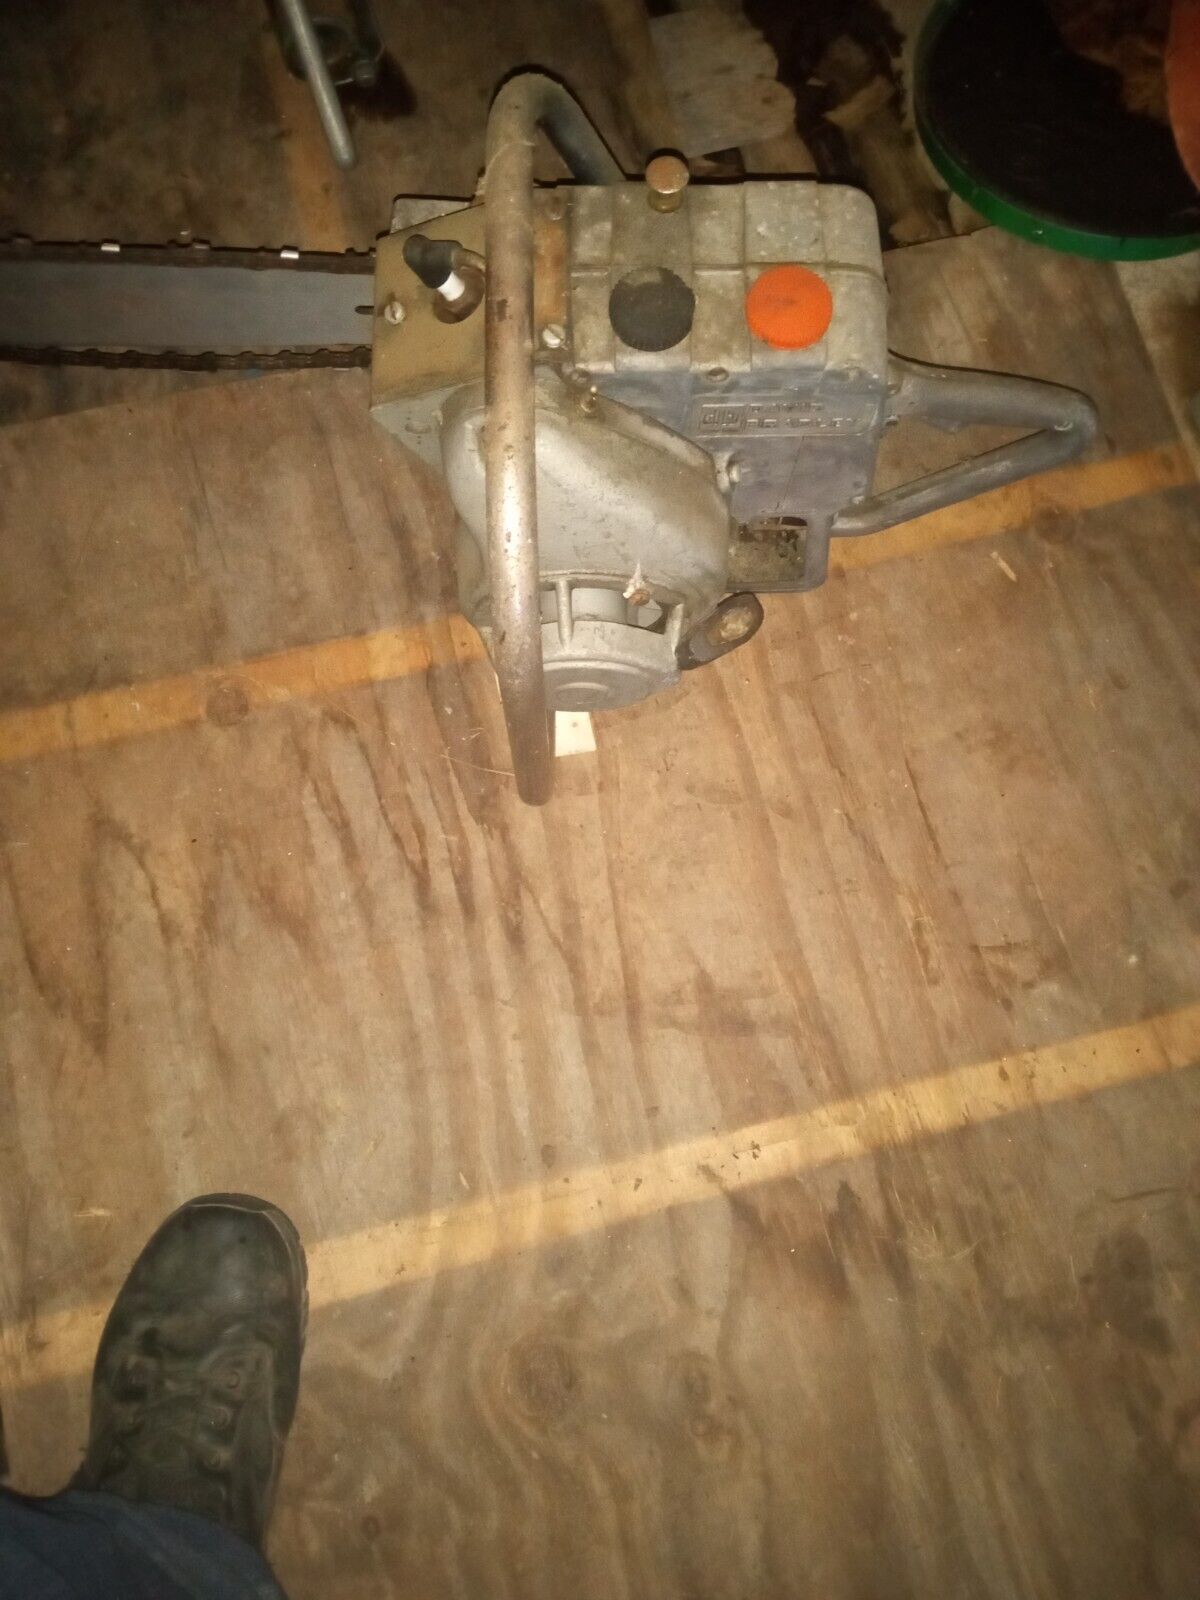 david bradley 360 chainsaw ready for restoration missing bar cover